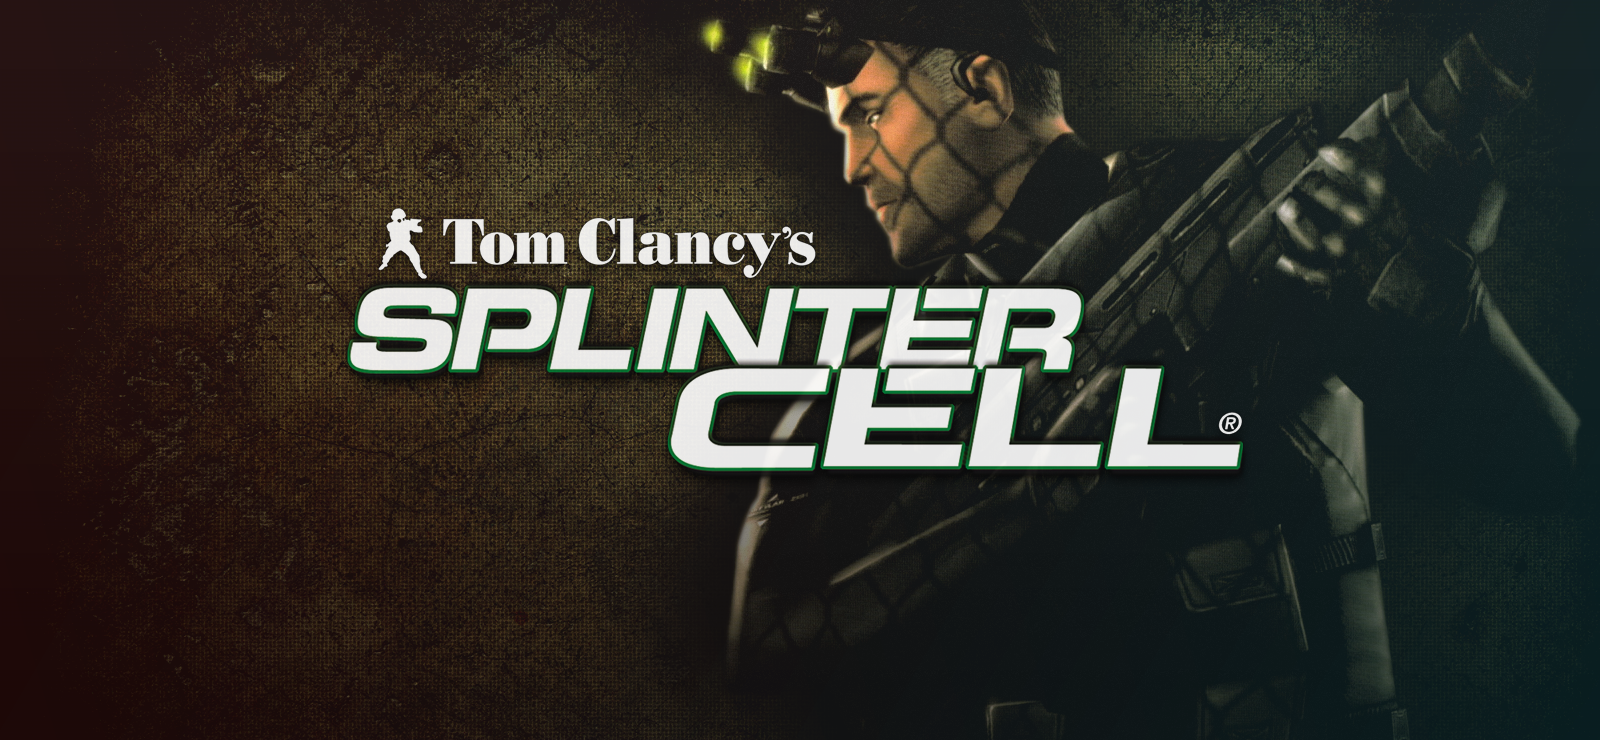 BESTSELLER - Tom Clancy's Splinter Cell®